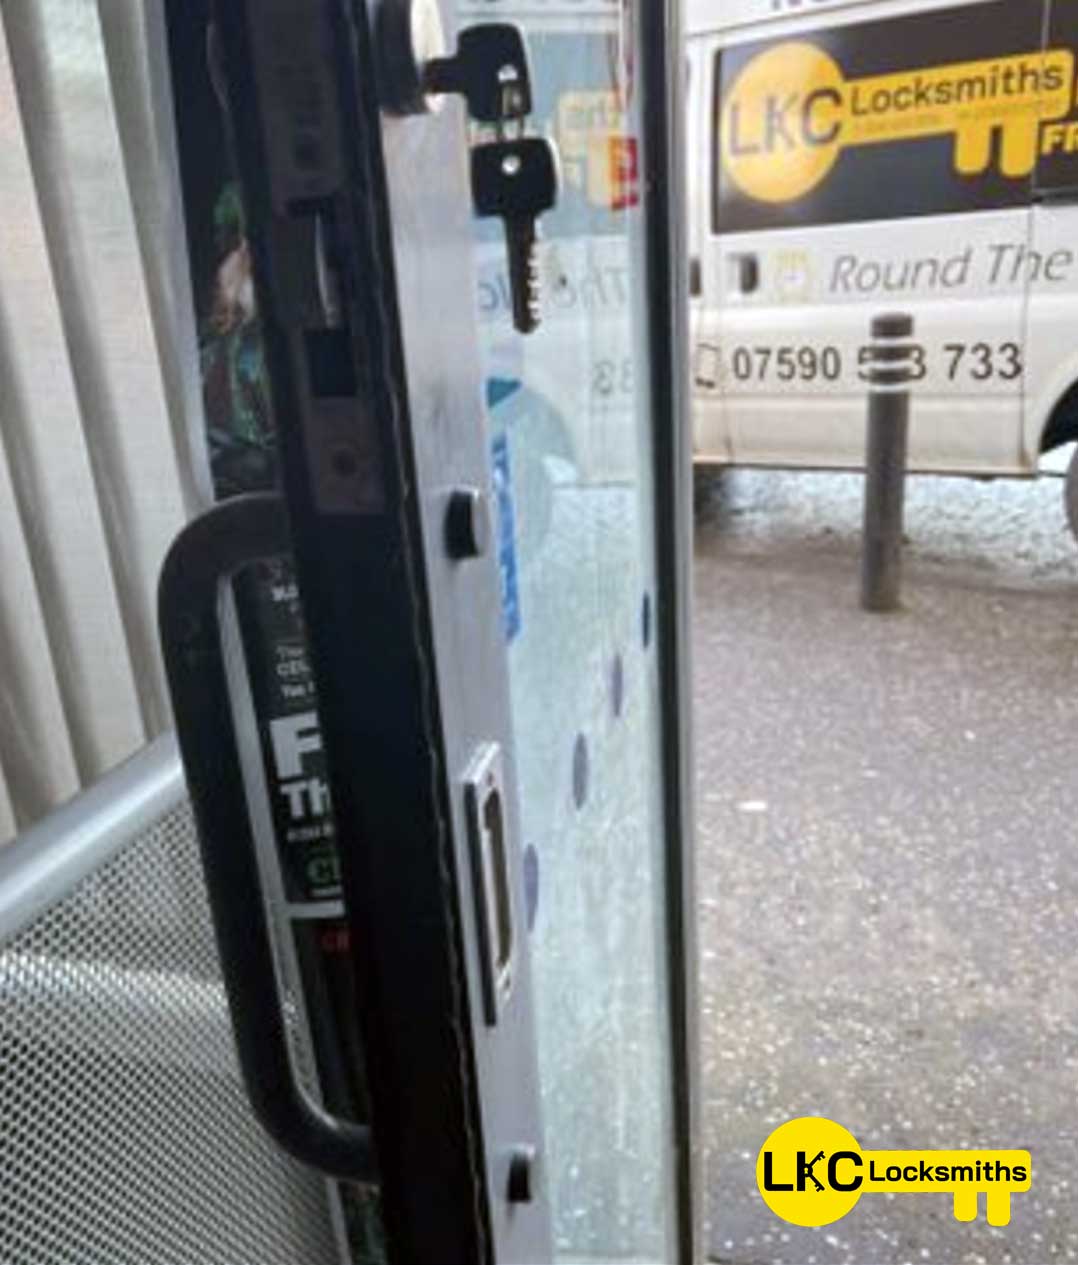 UPVC Doors & Window Locks Repair or Replacement Services in Glasgow